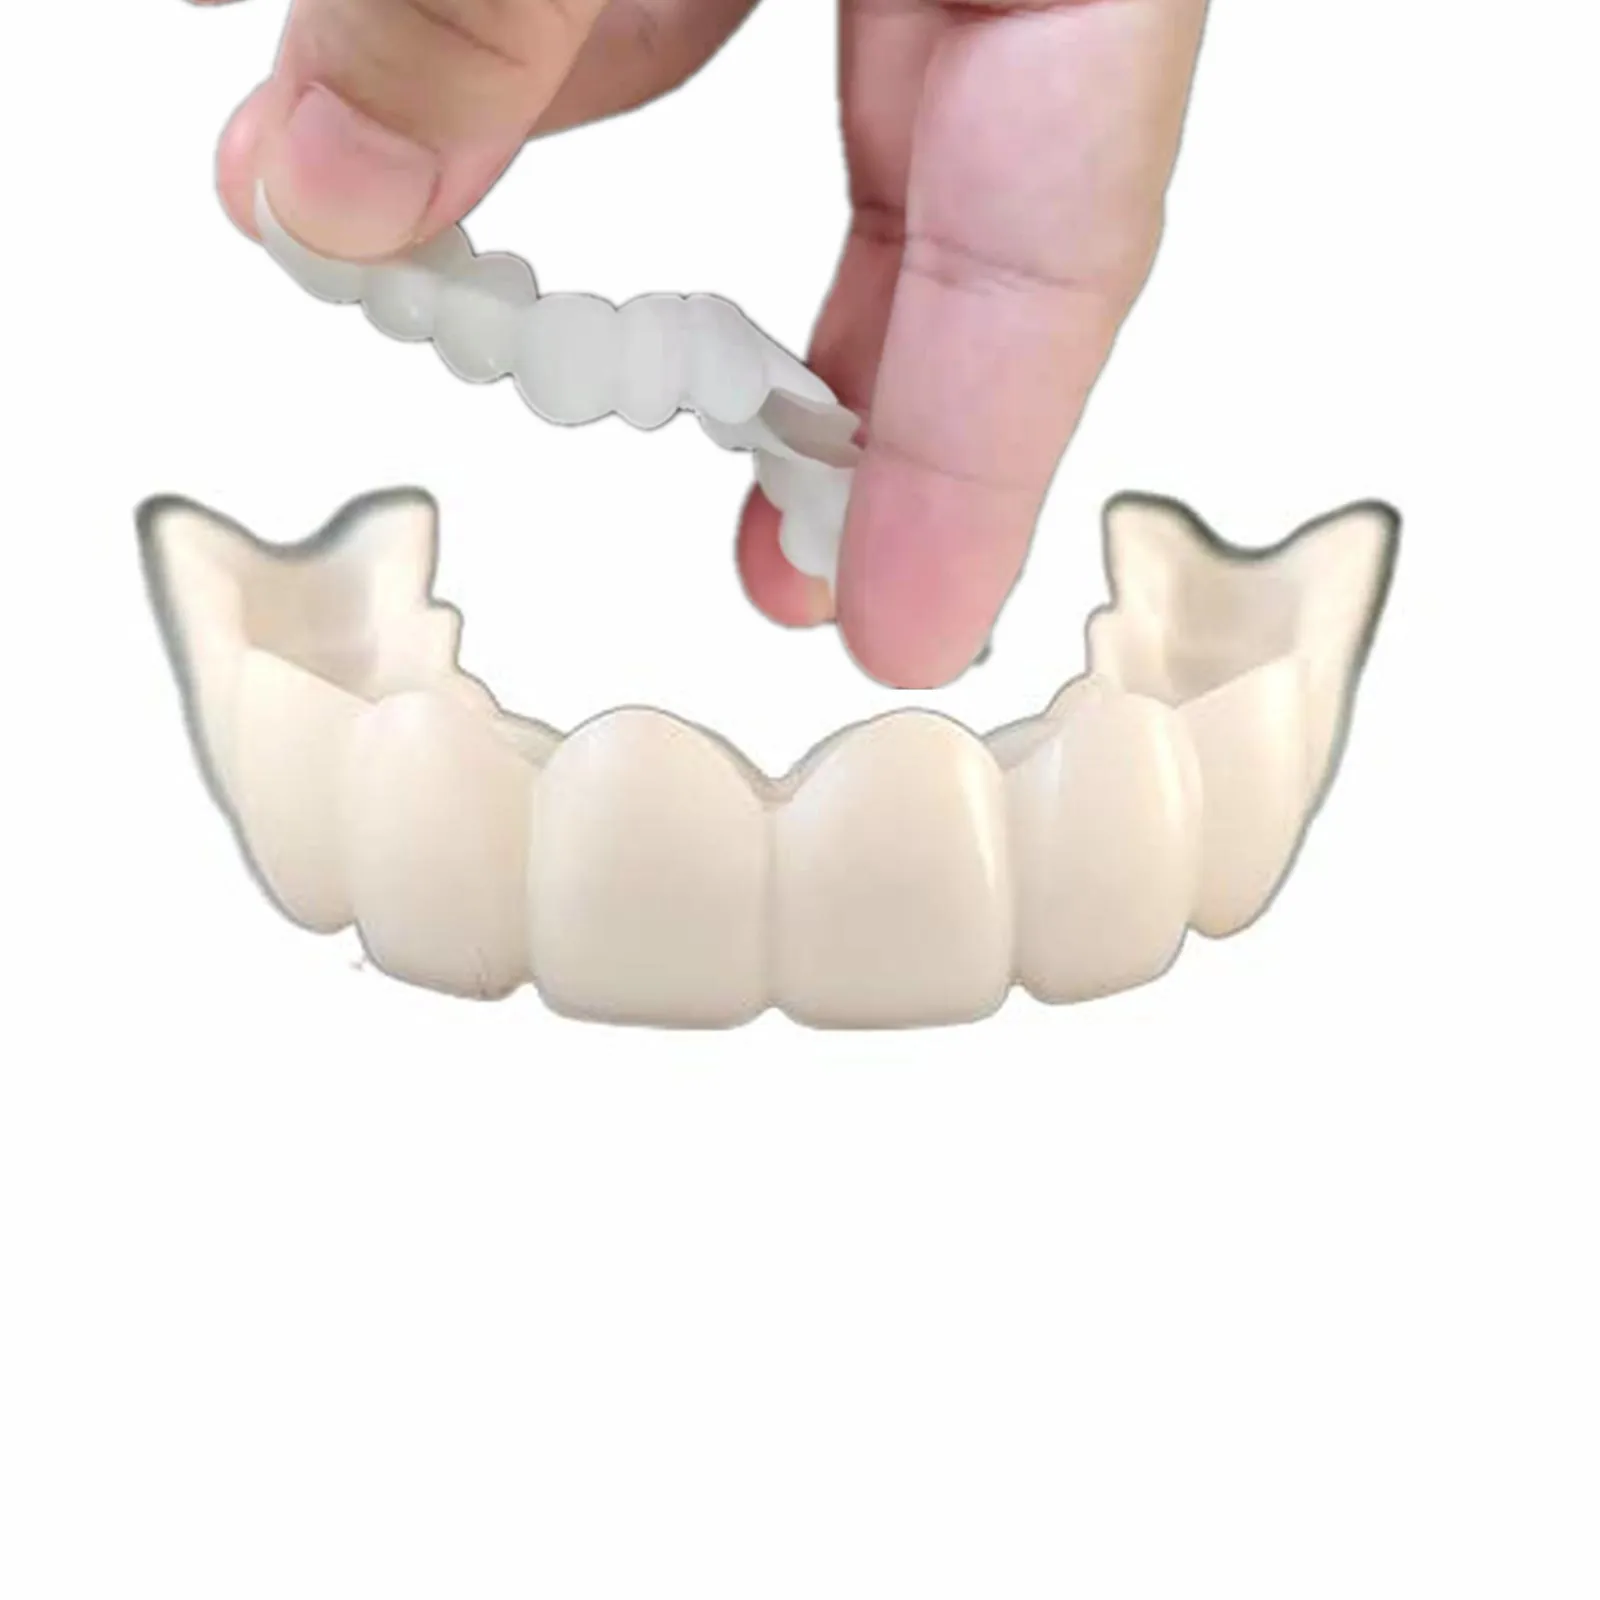 Soft Silicone Gel Dental Oral Upper Lower Fake False Teeth Cover Smile Veneers Dentures Braces Dental Equipment Whitening Molds